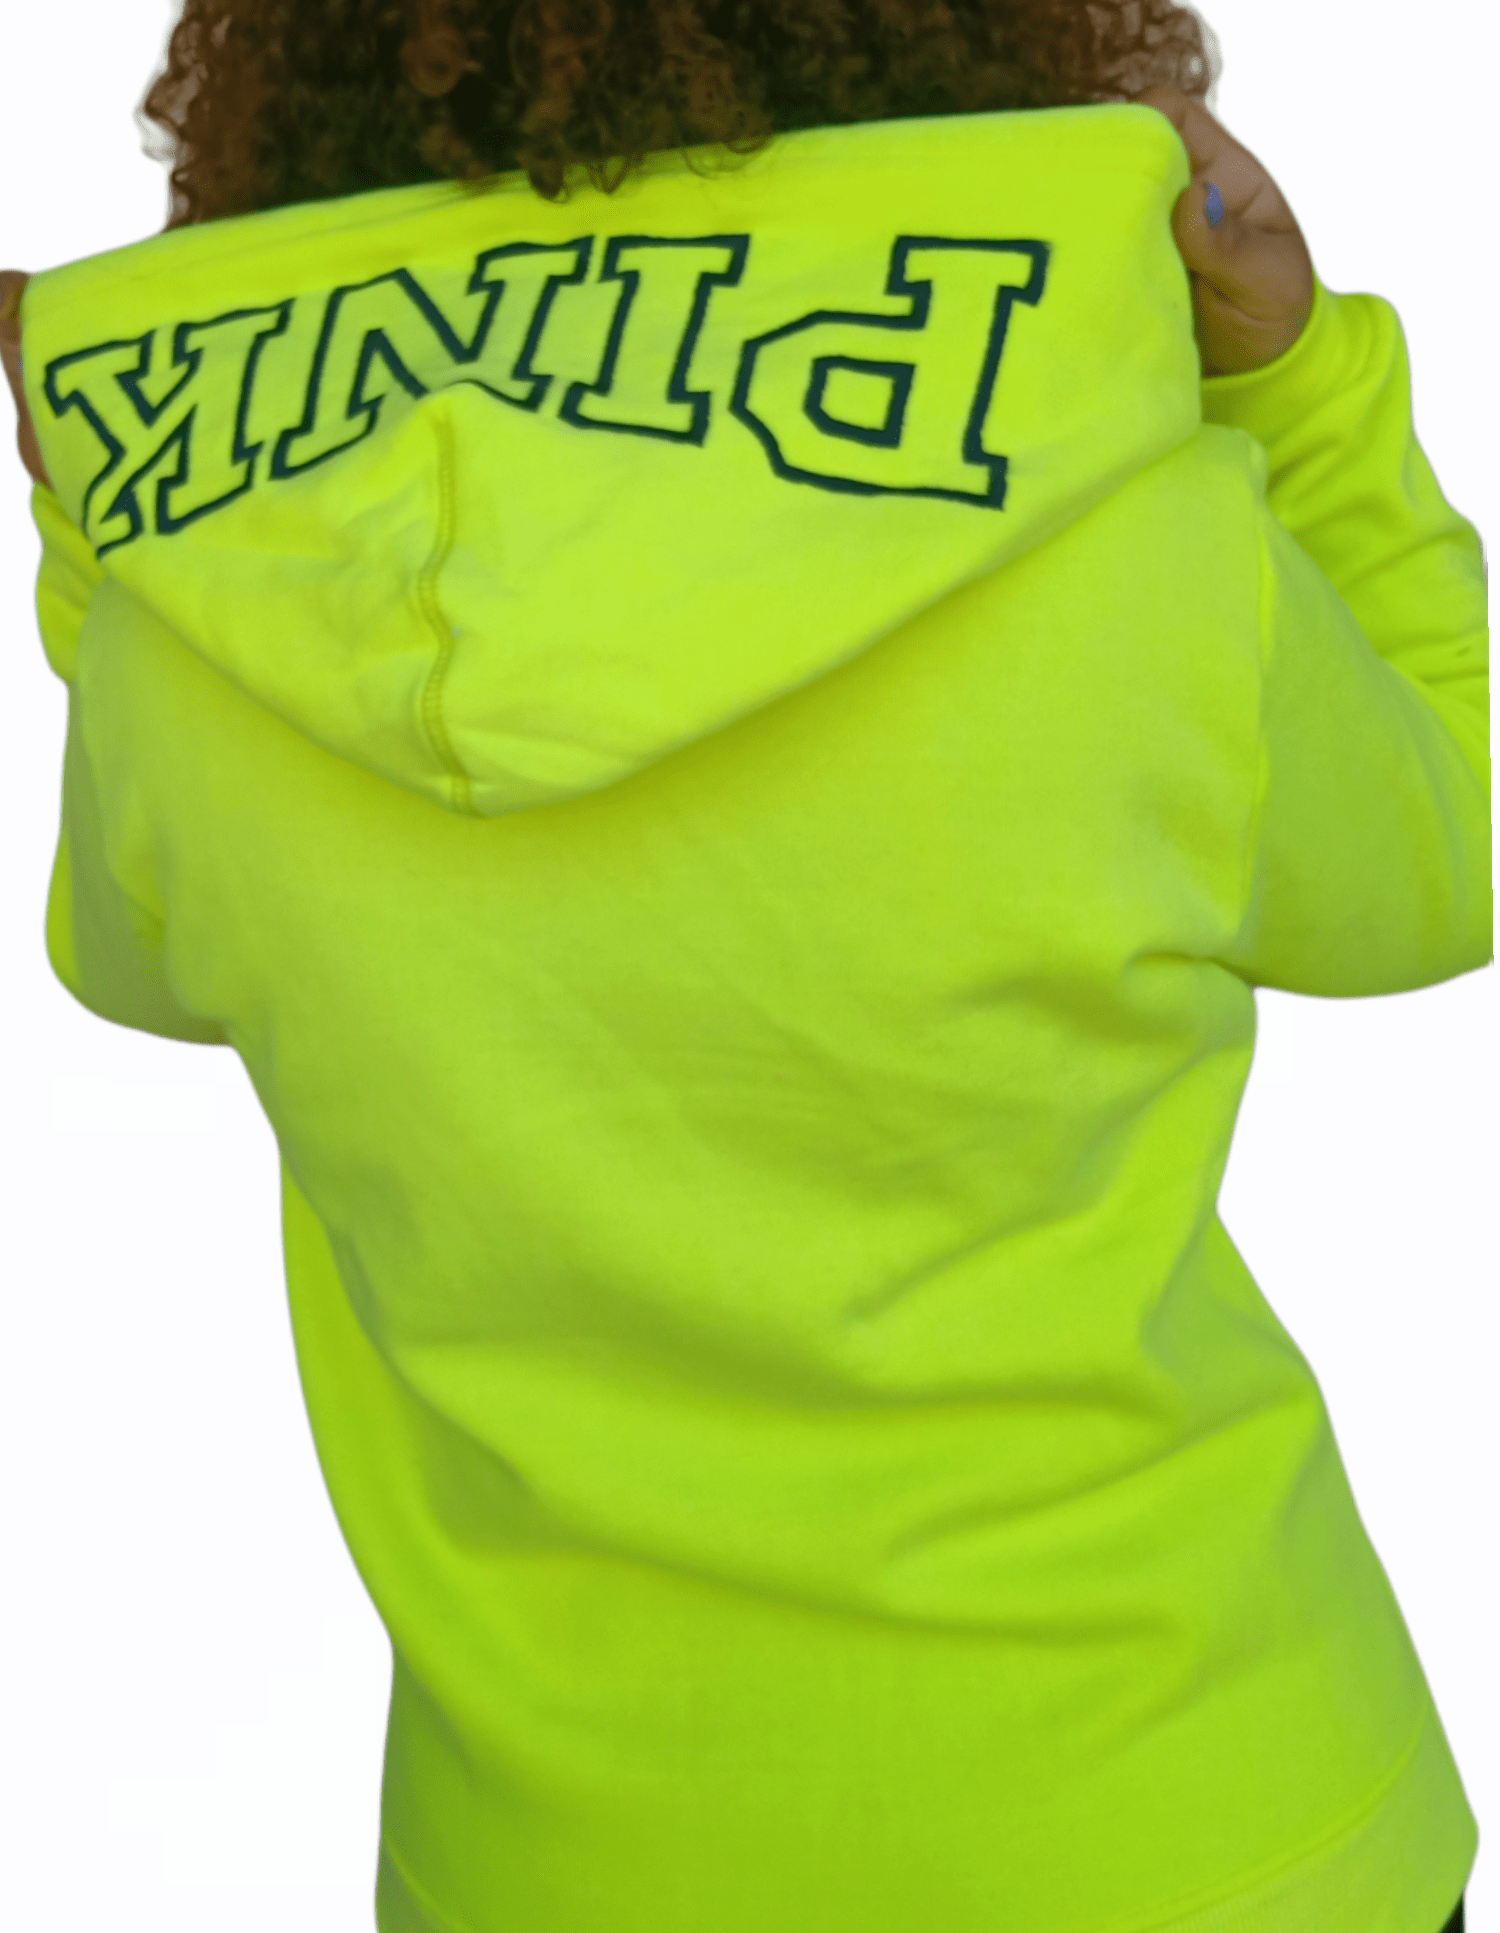 ElOutlet Women Sportsn Hoodie Jacket PINK Women Hoodie Jacket - Neon Yellow